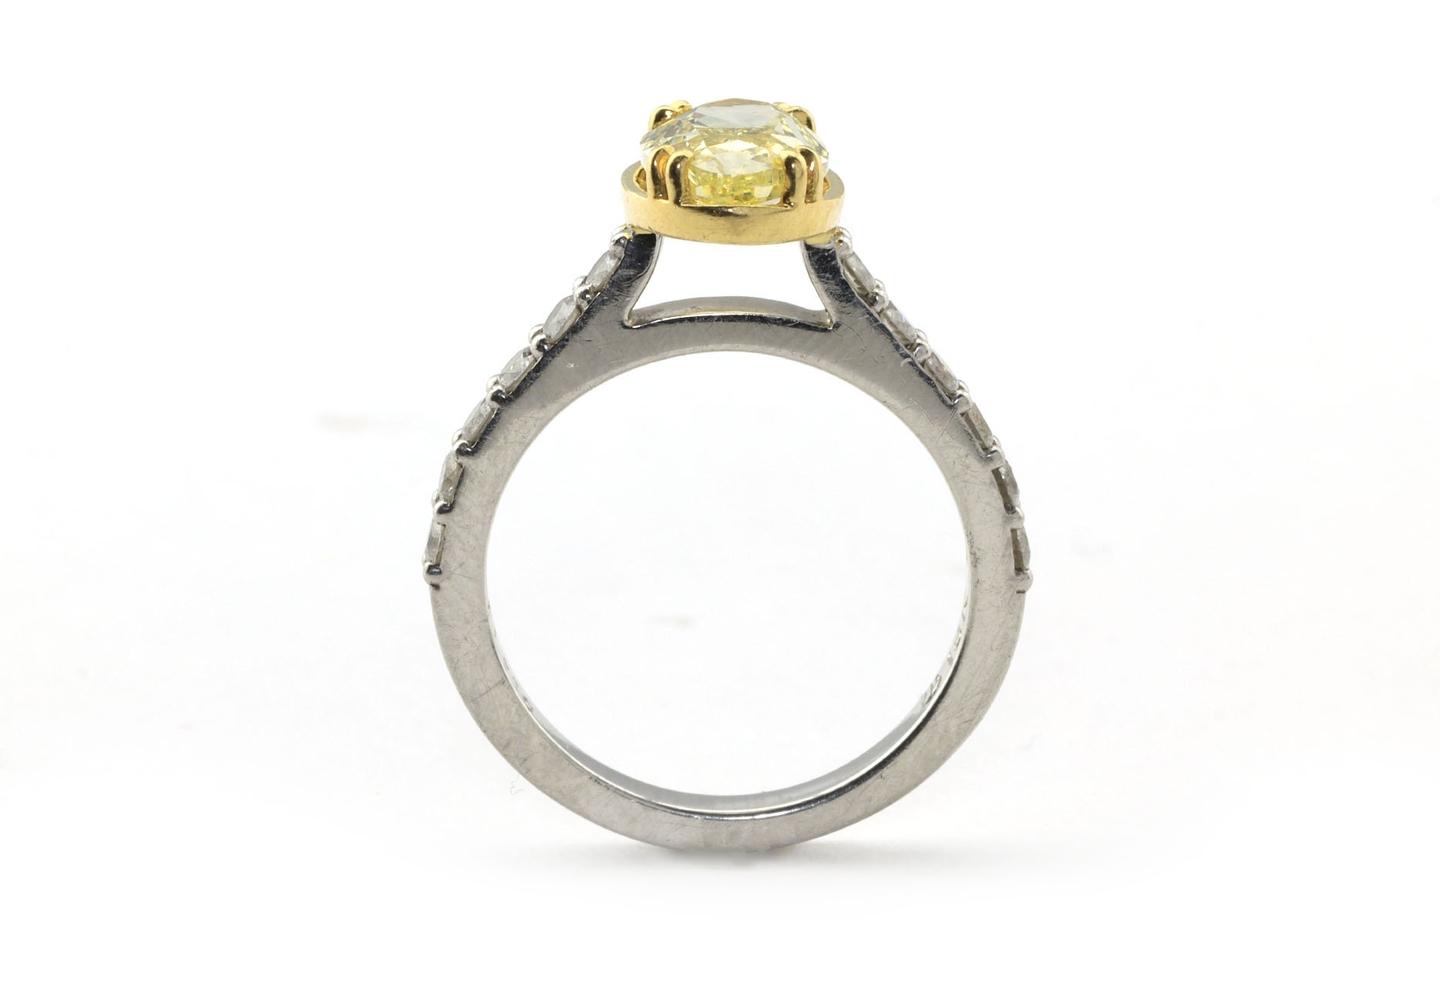 Platinum Yellow Diamond Ring